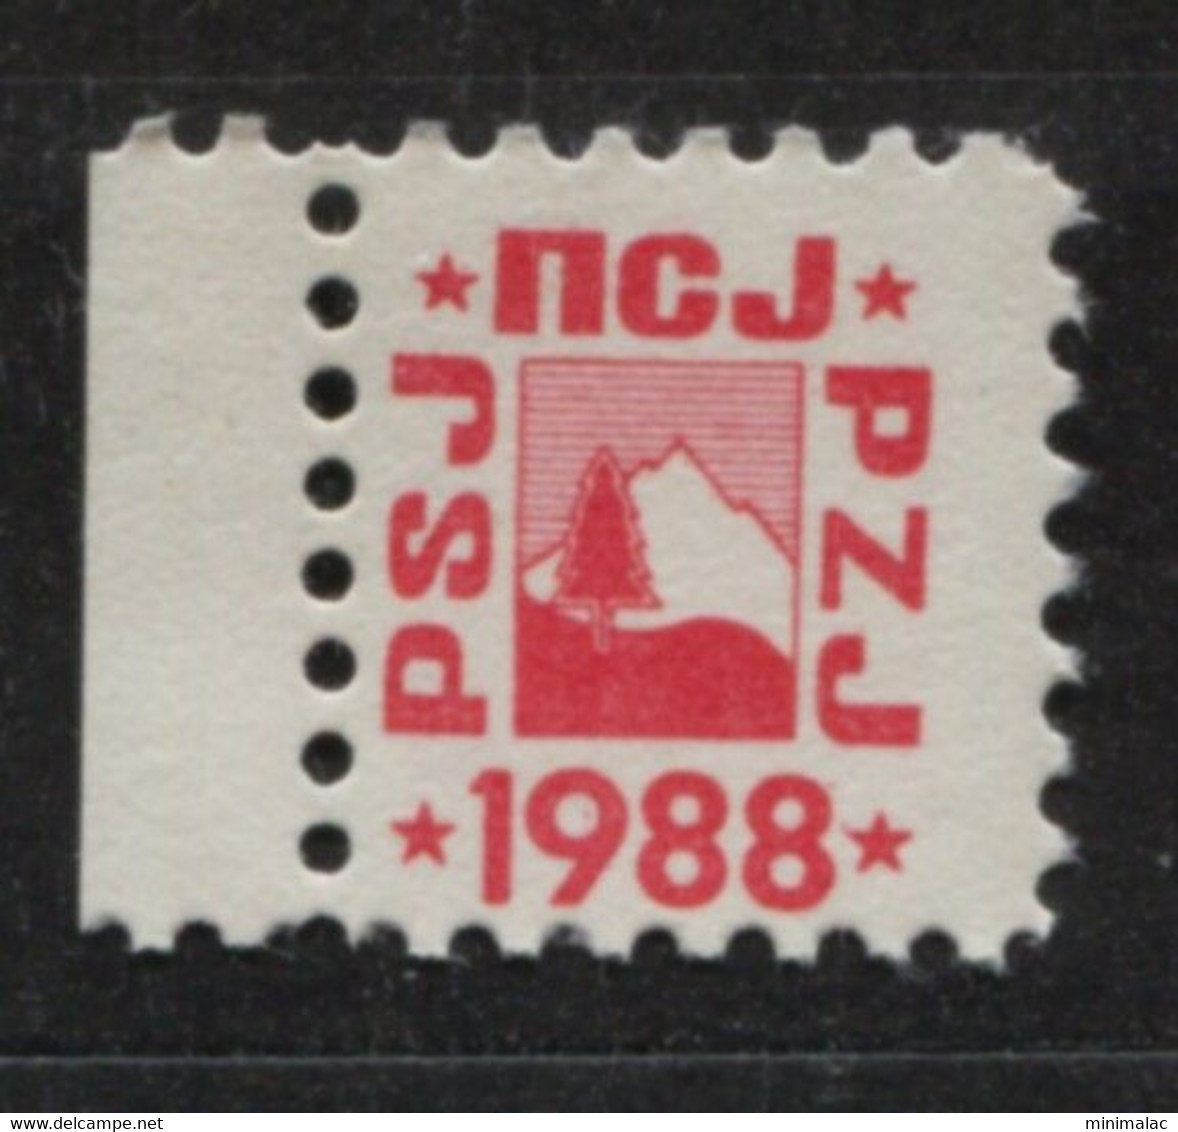 Yugoslavia 1988, Stamp For Membership Mountaineering Association Of Yugoslavia, Revenue, Tax Stamp, Cinderella, Red - Dienstzegels